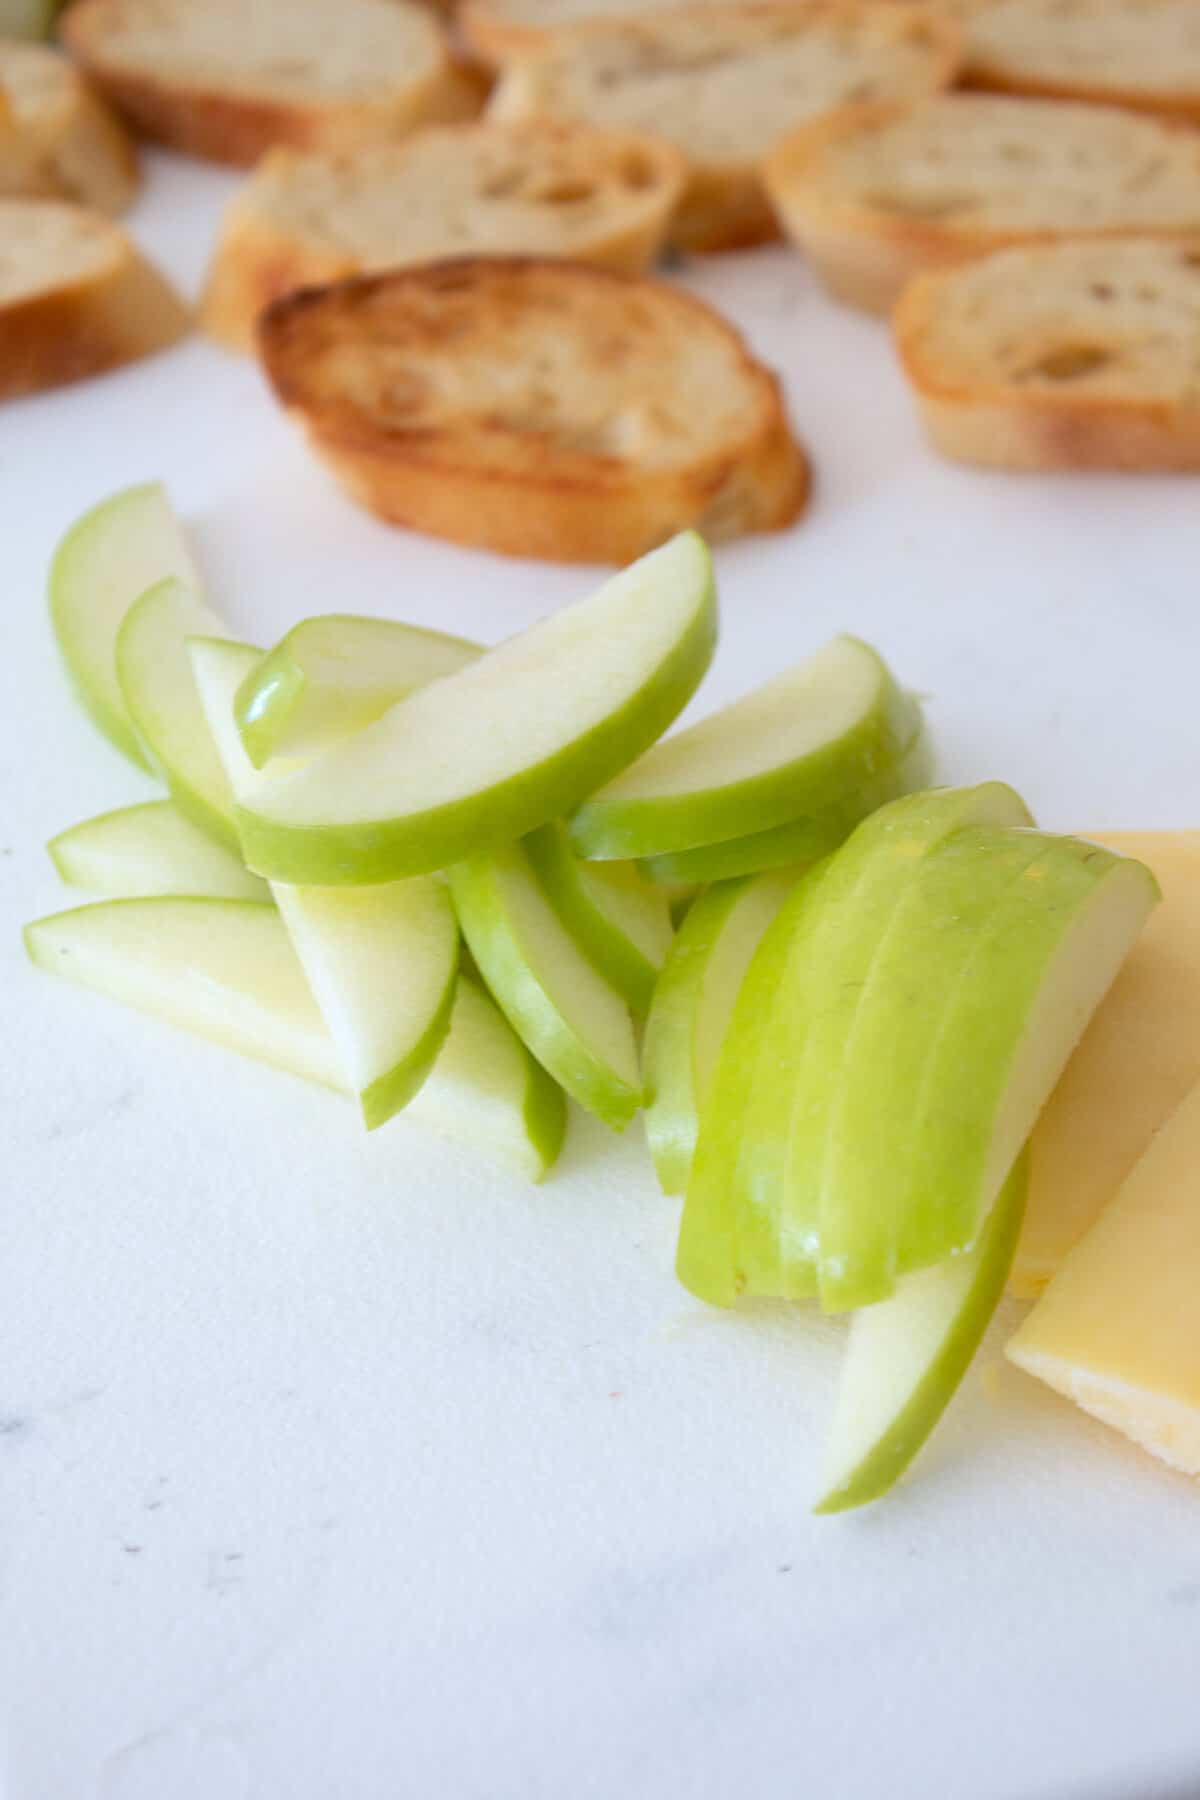 thin sliced apples on a cutting board